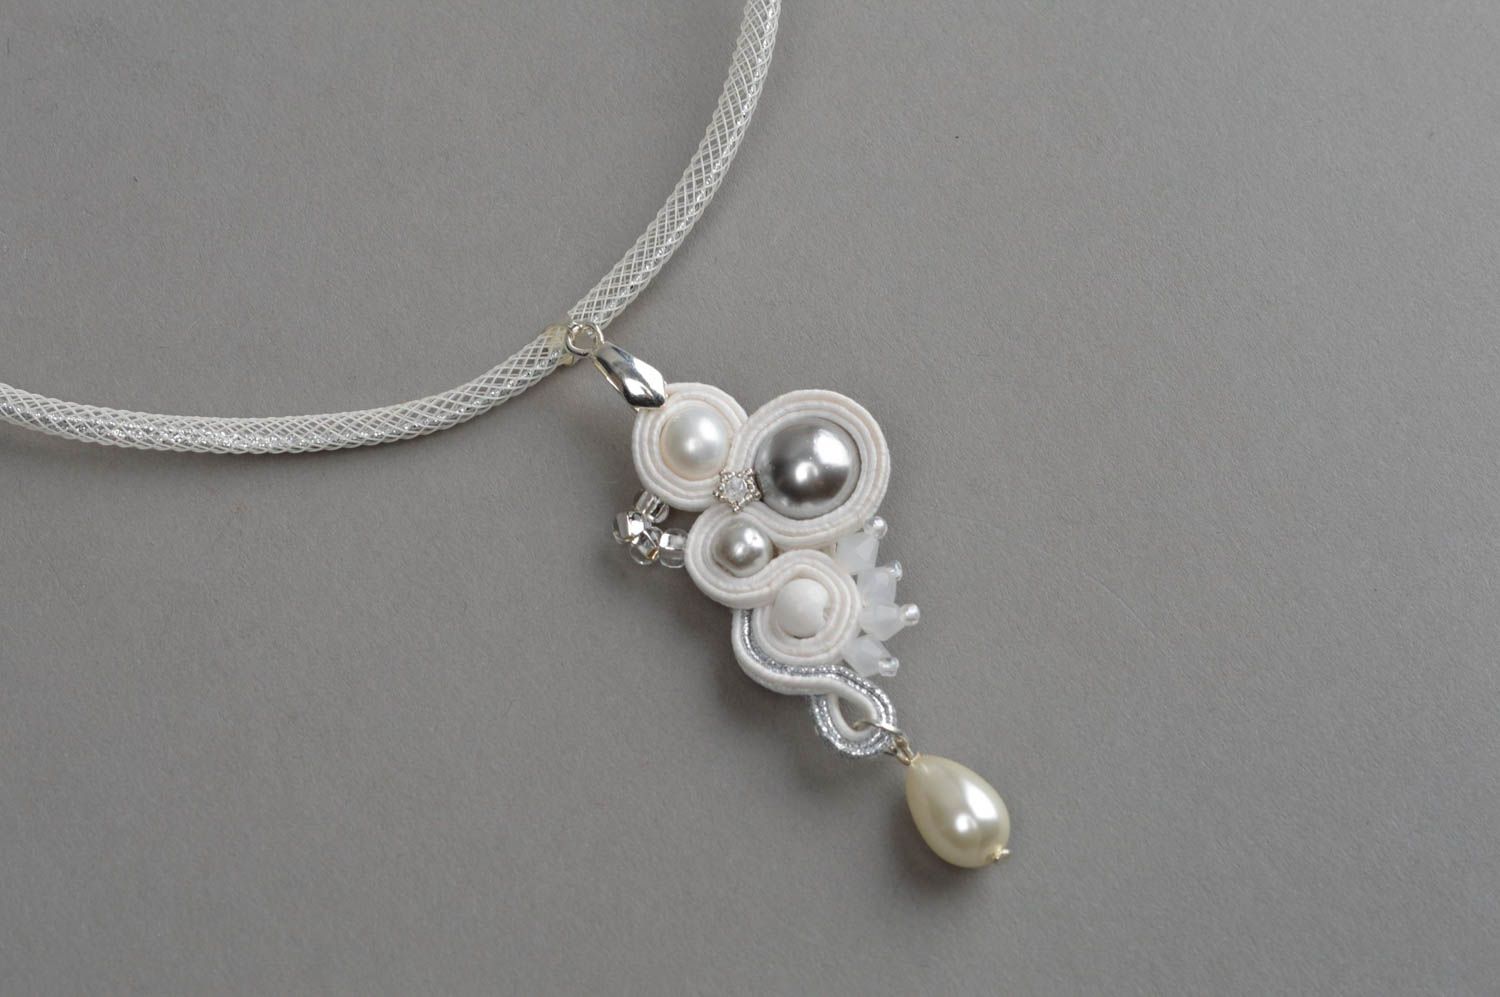 Handmade beautiful pendant soutache unusual accessory cute stylish jewelry photo 5